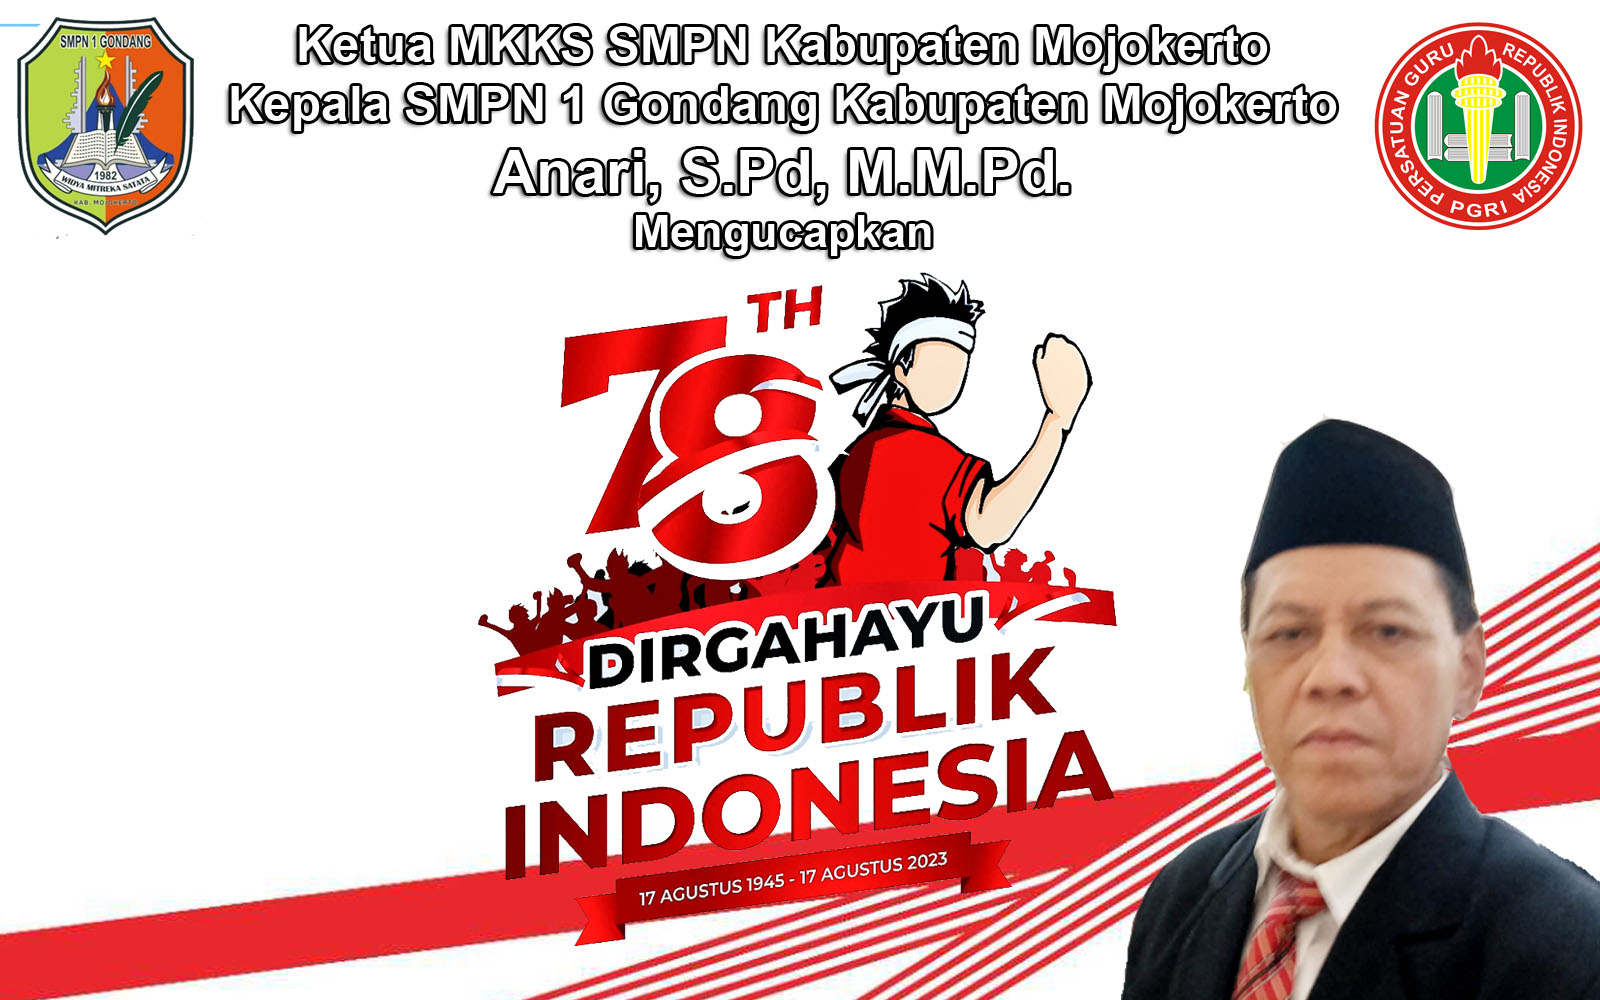 Ketua MKKS SMPN Kabupaten Mojokerto dan Kepala SMPN 1 Gondang Kabupaten Mojokerto Mengucapkan Dirgahayu RI Ke-78